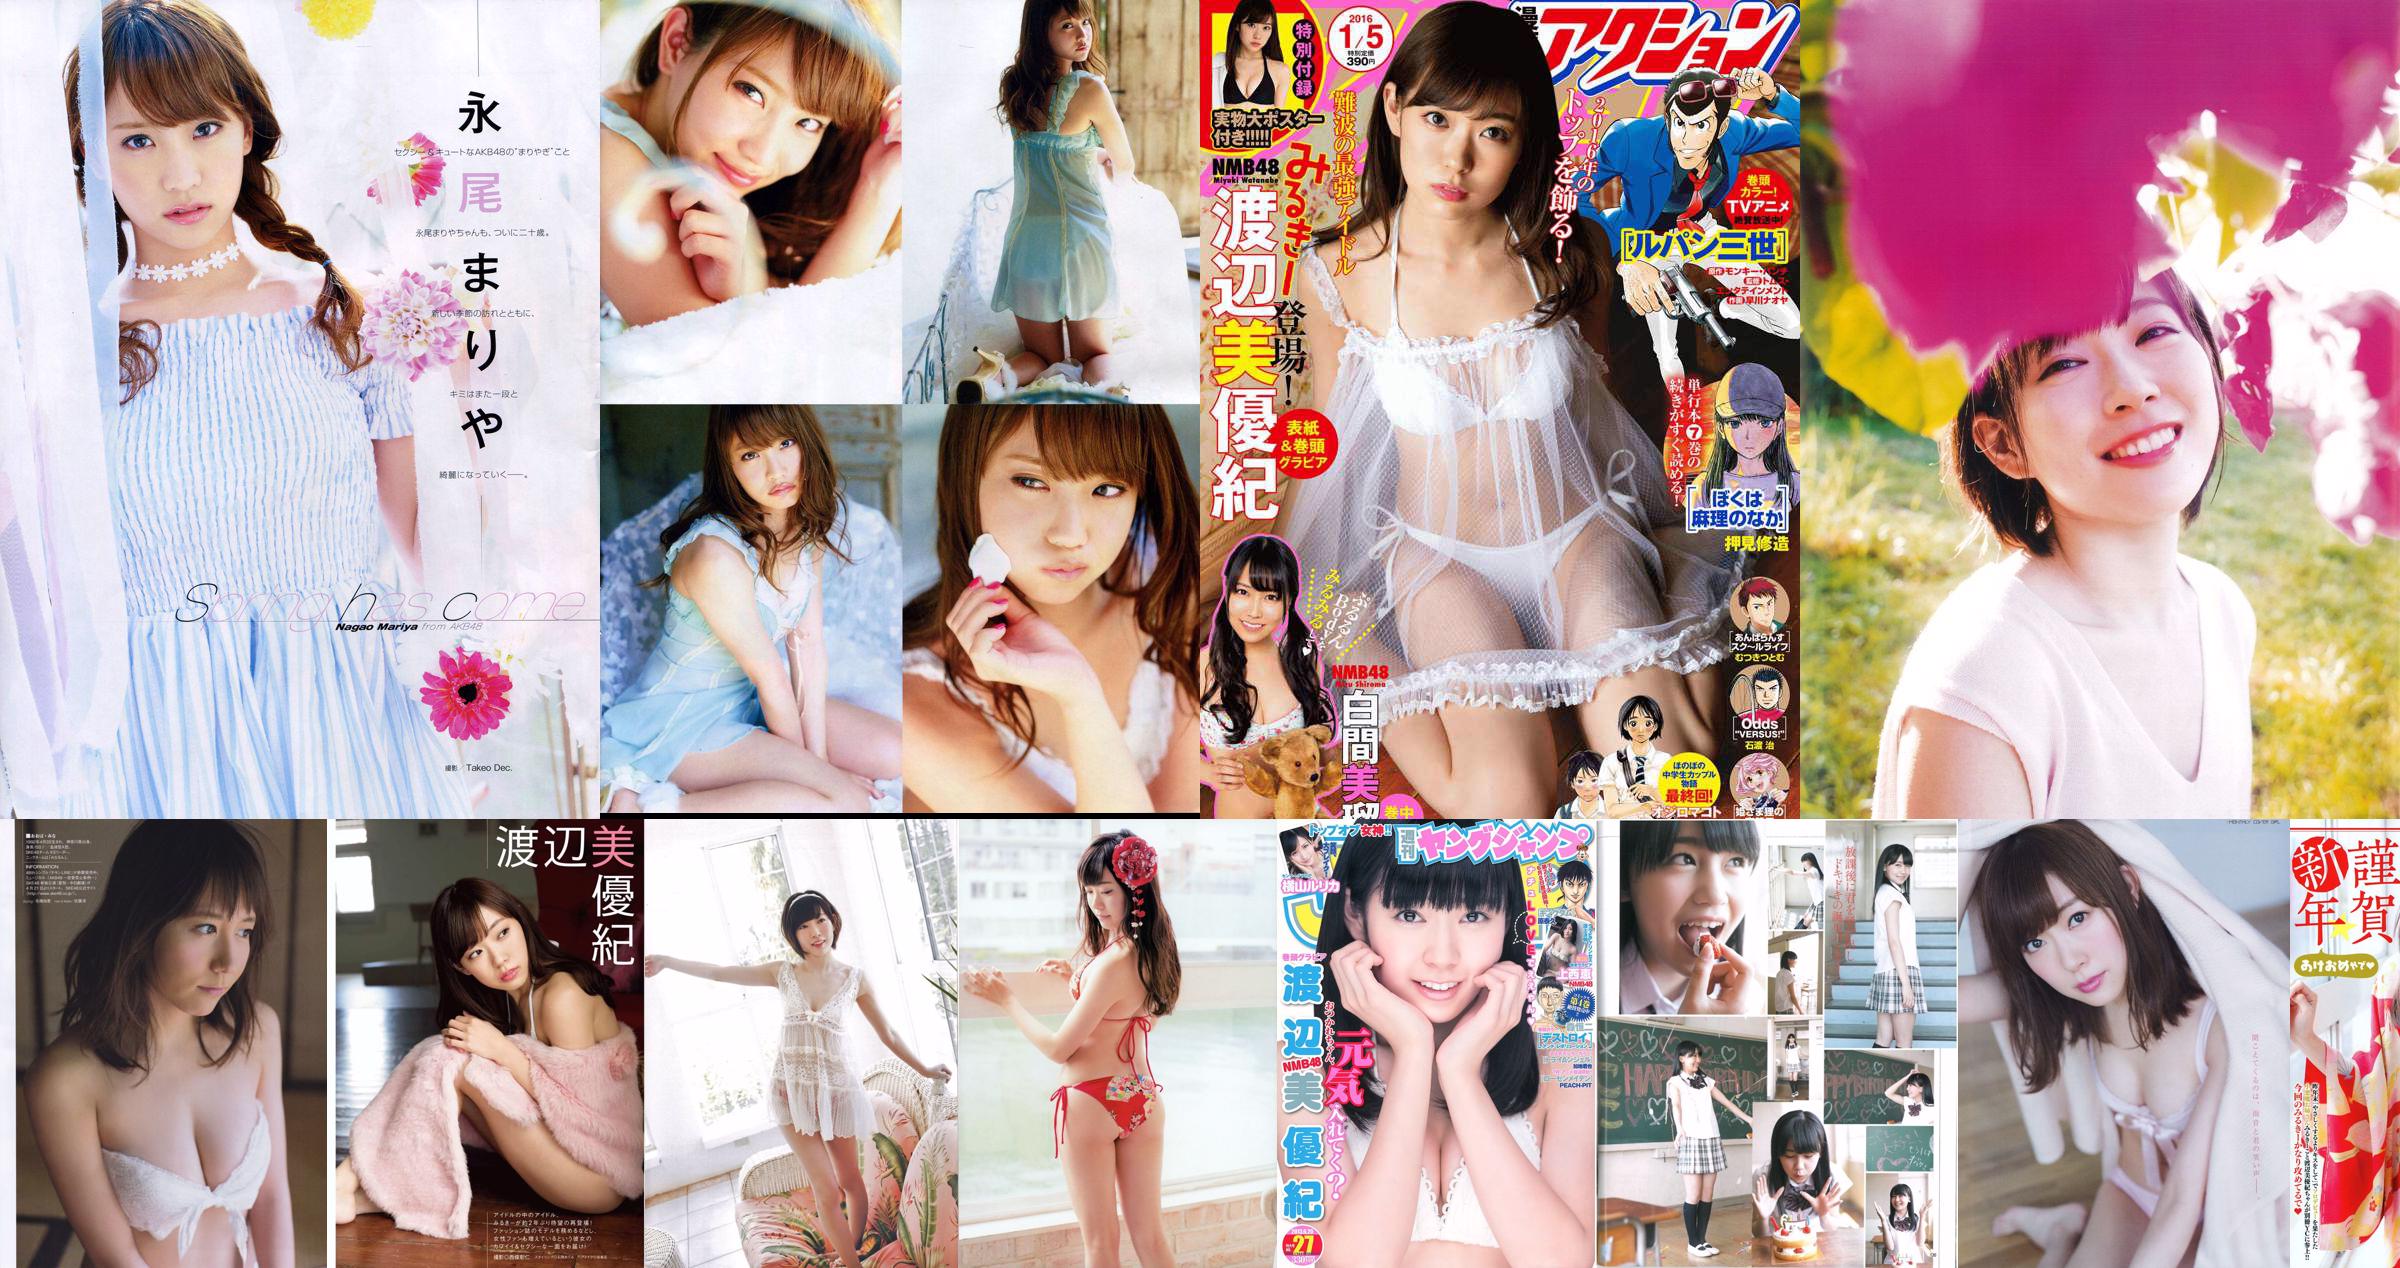 Miyuki Watanabe The most 上もが [Young Animal] 2012 No.24 Photo Magazine No.530d32 Page 1